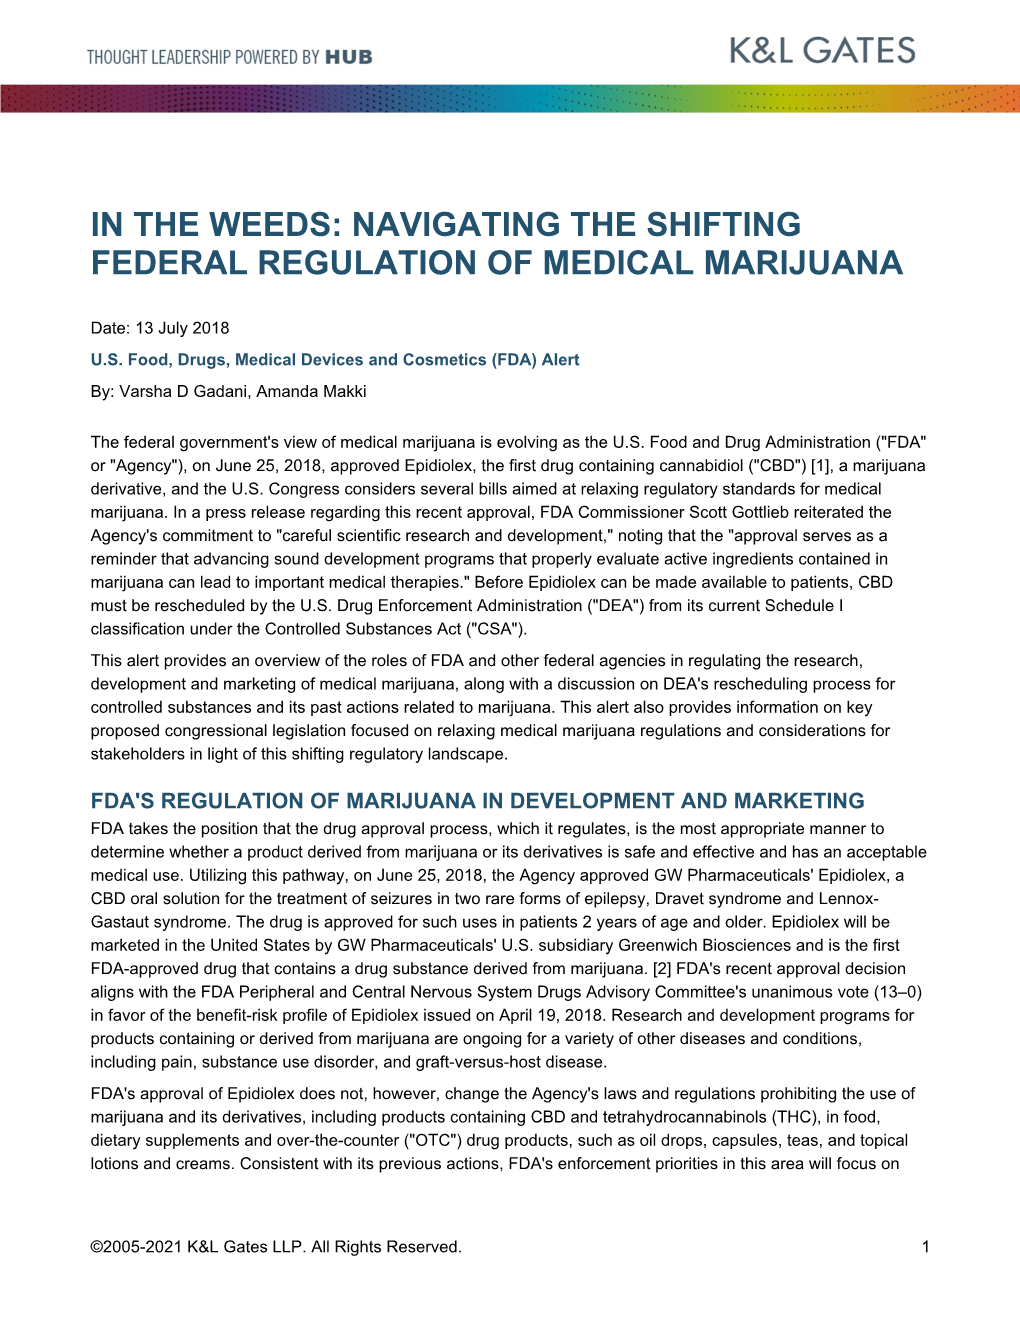 Navigating the Shifting Federal Regulation of Medical Marijuana